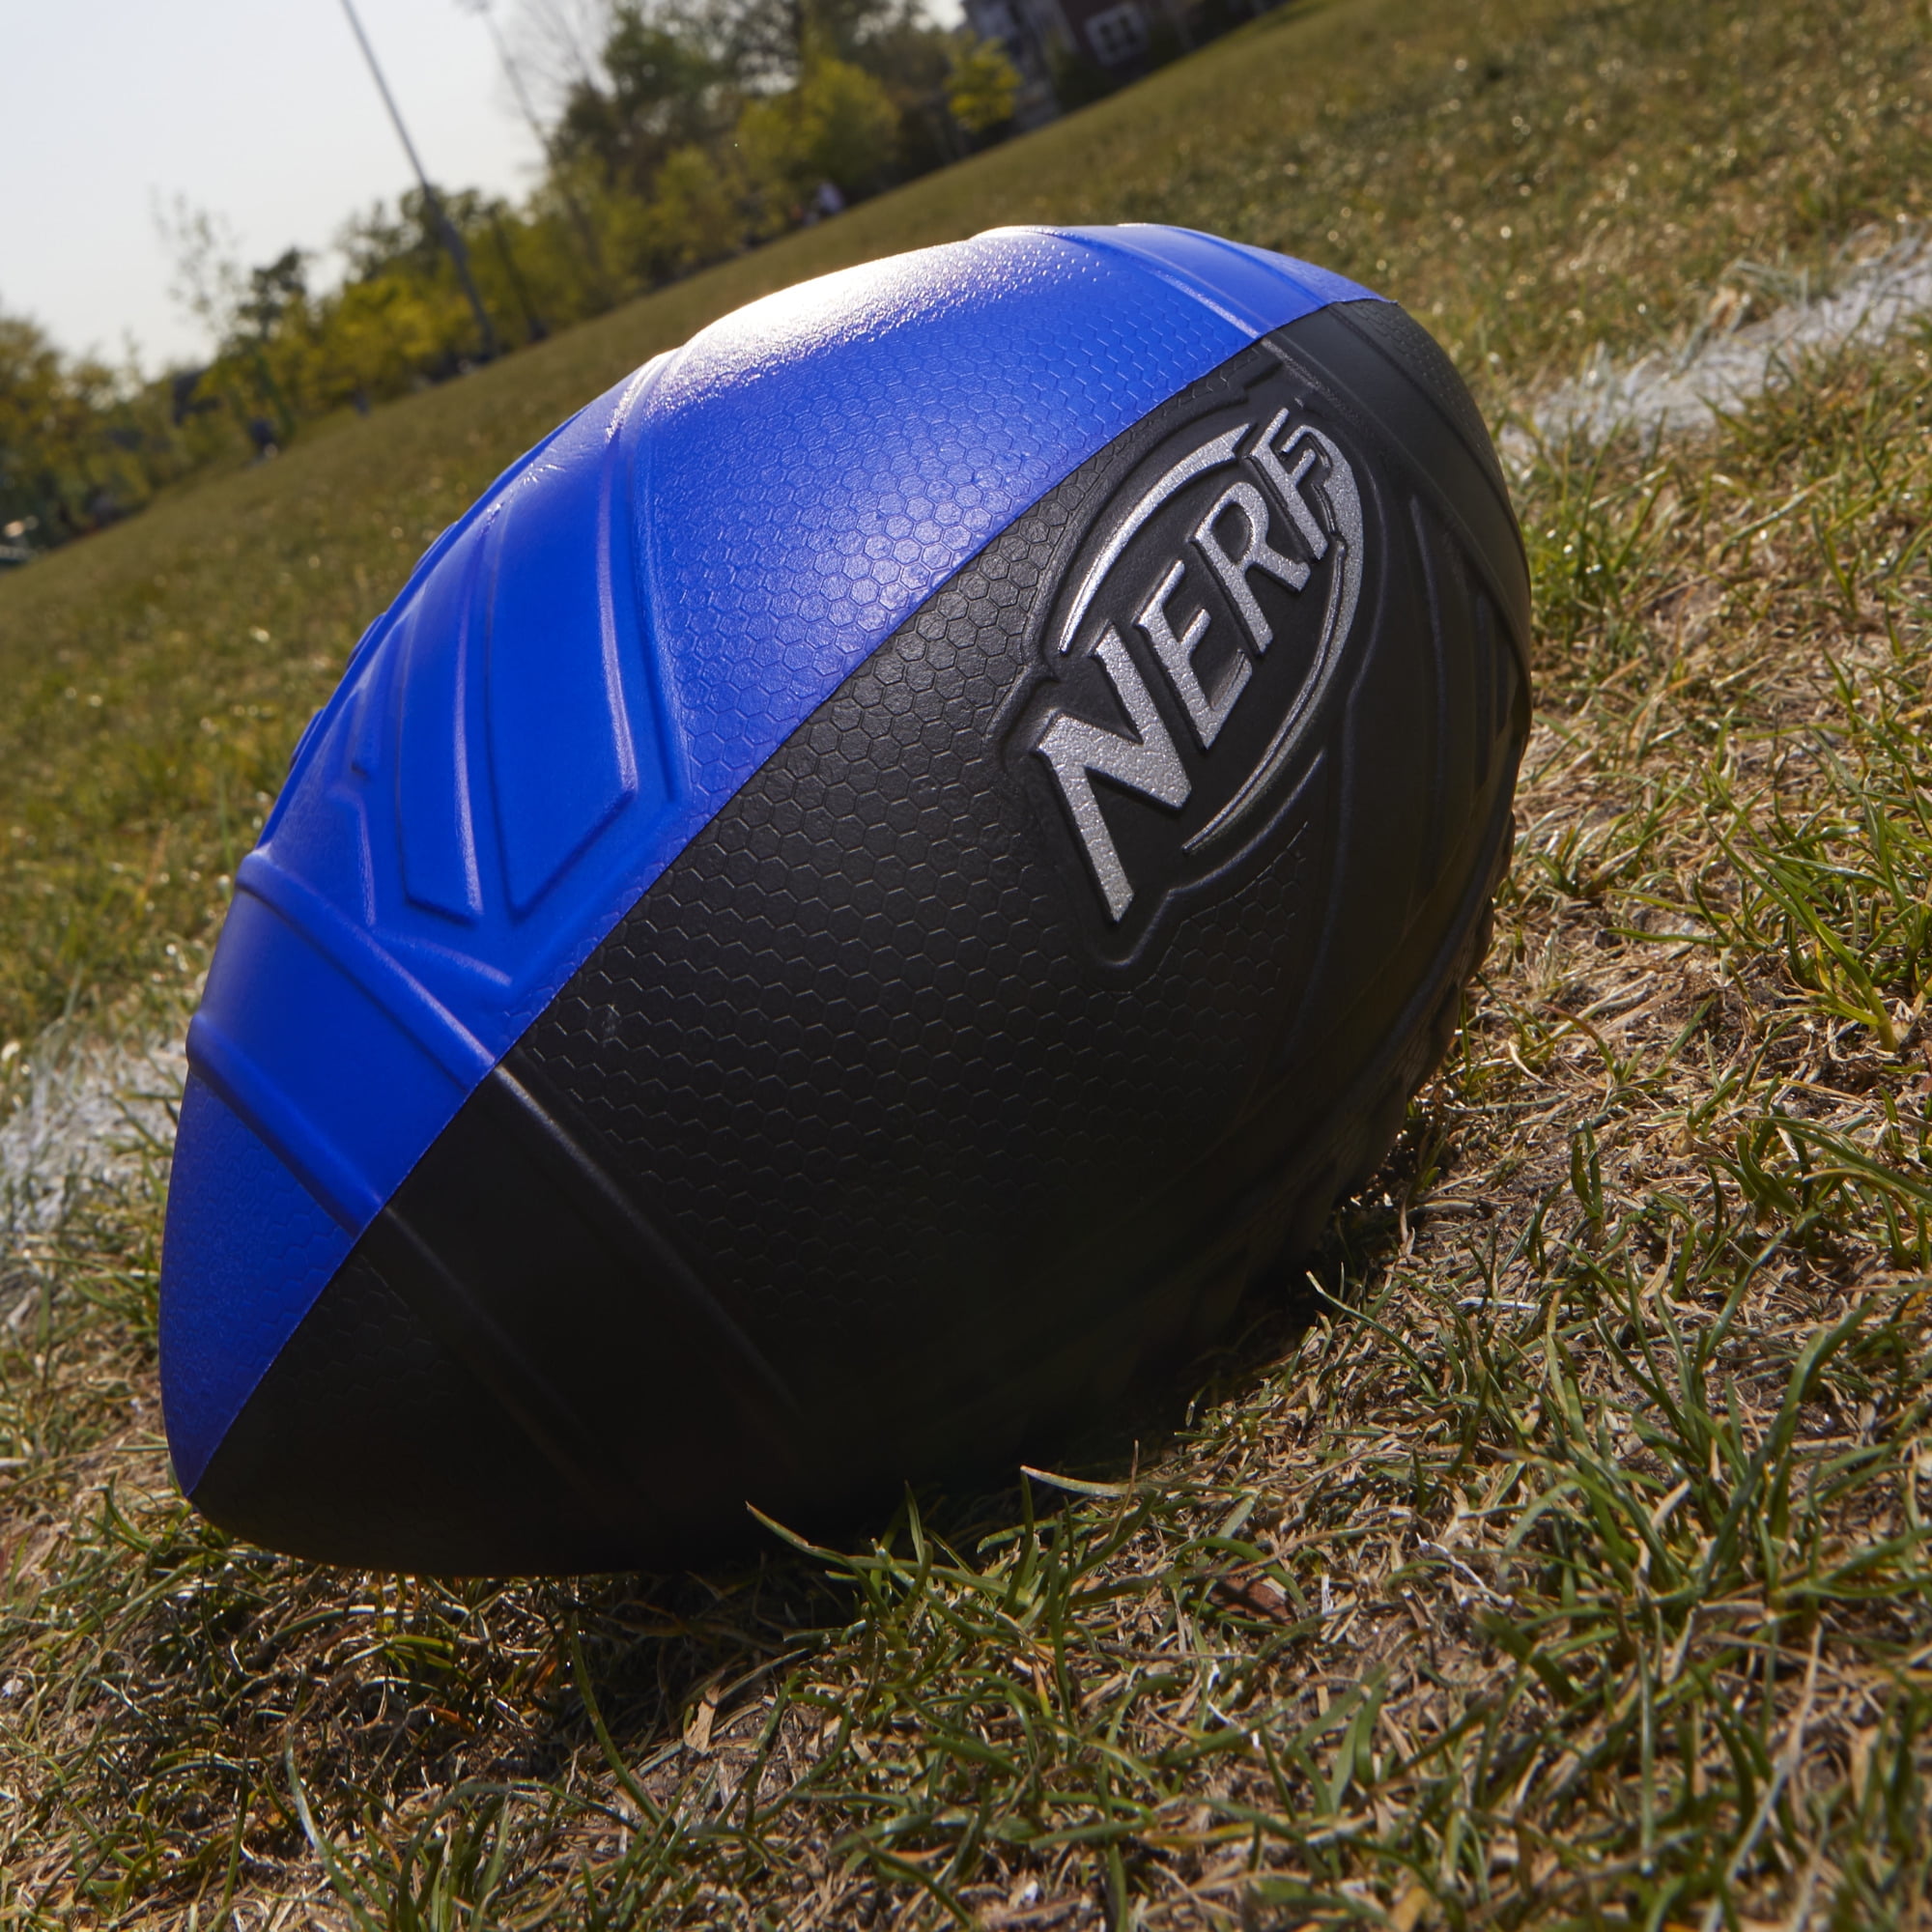 Nerf Pro Grip Blue Football 